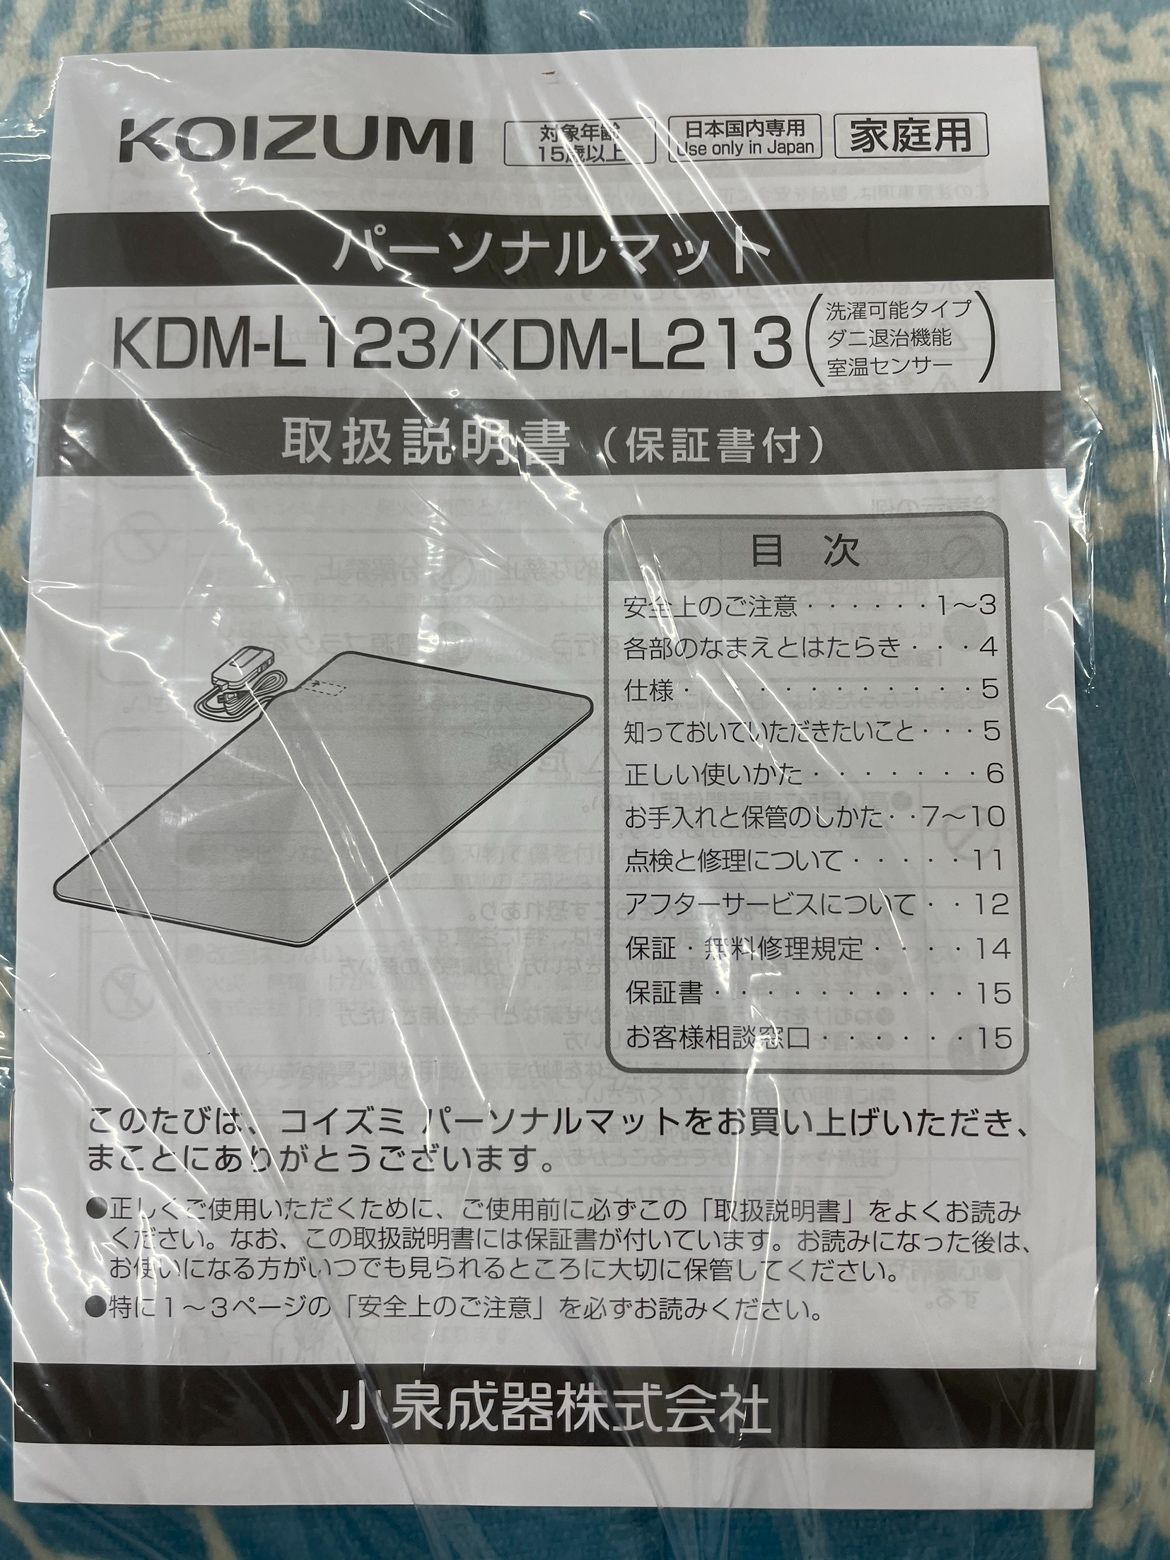 KOIZUMI KDM-L117 パーソナルマット　リサ　ラーソン